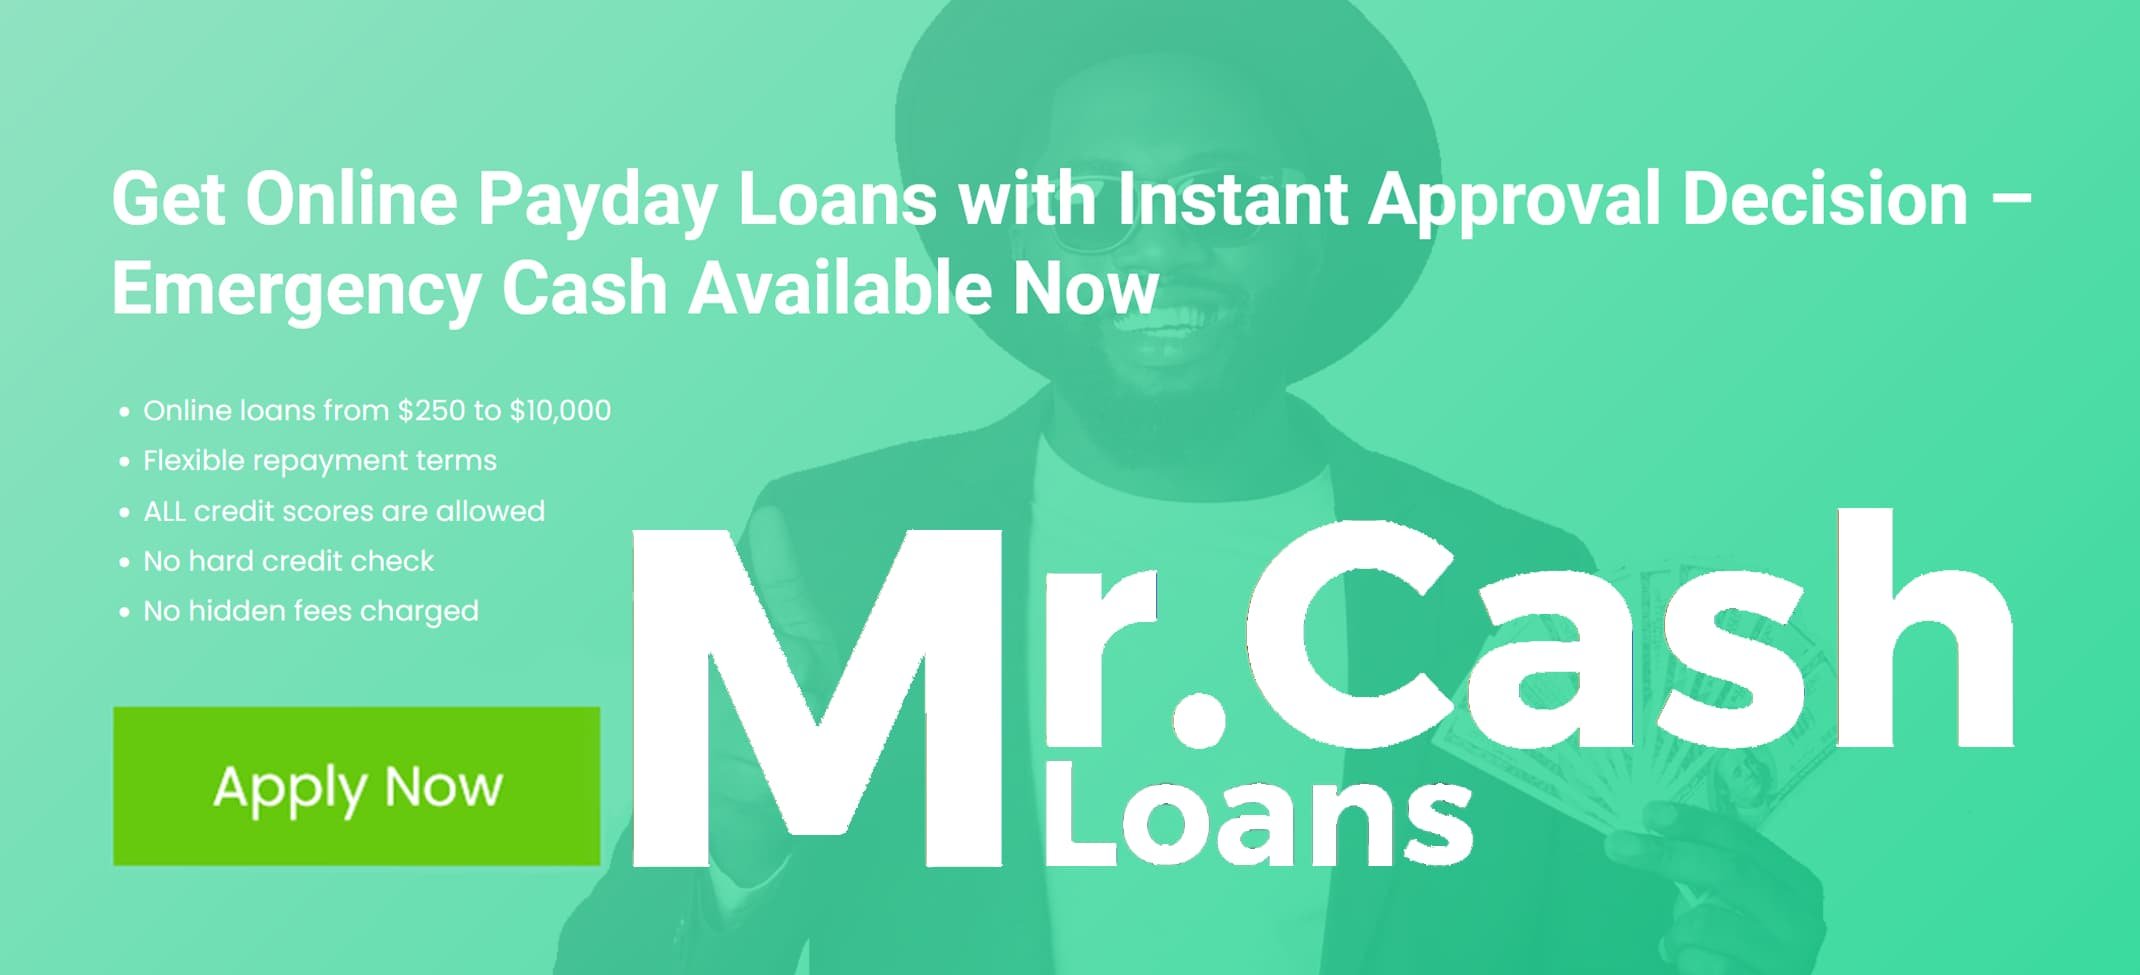 Mr. Cash Loans in Essex Junction, VT 05452 cover